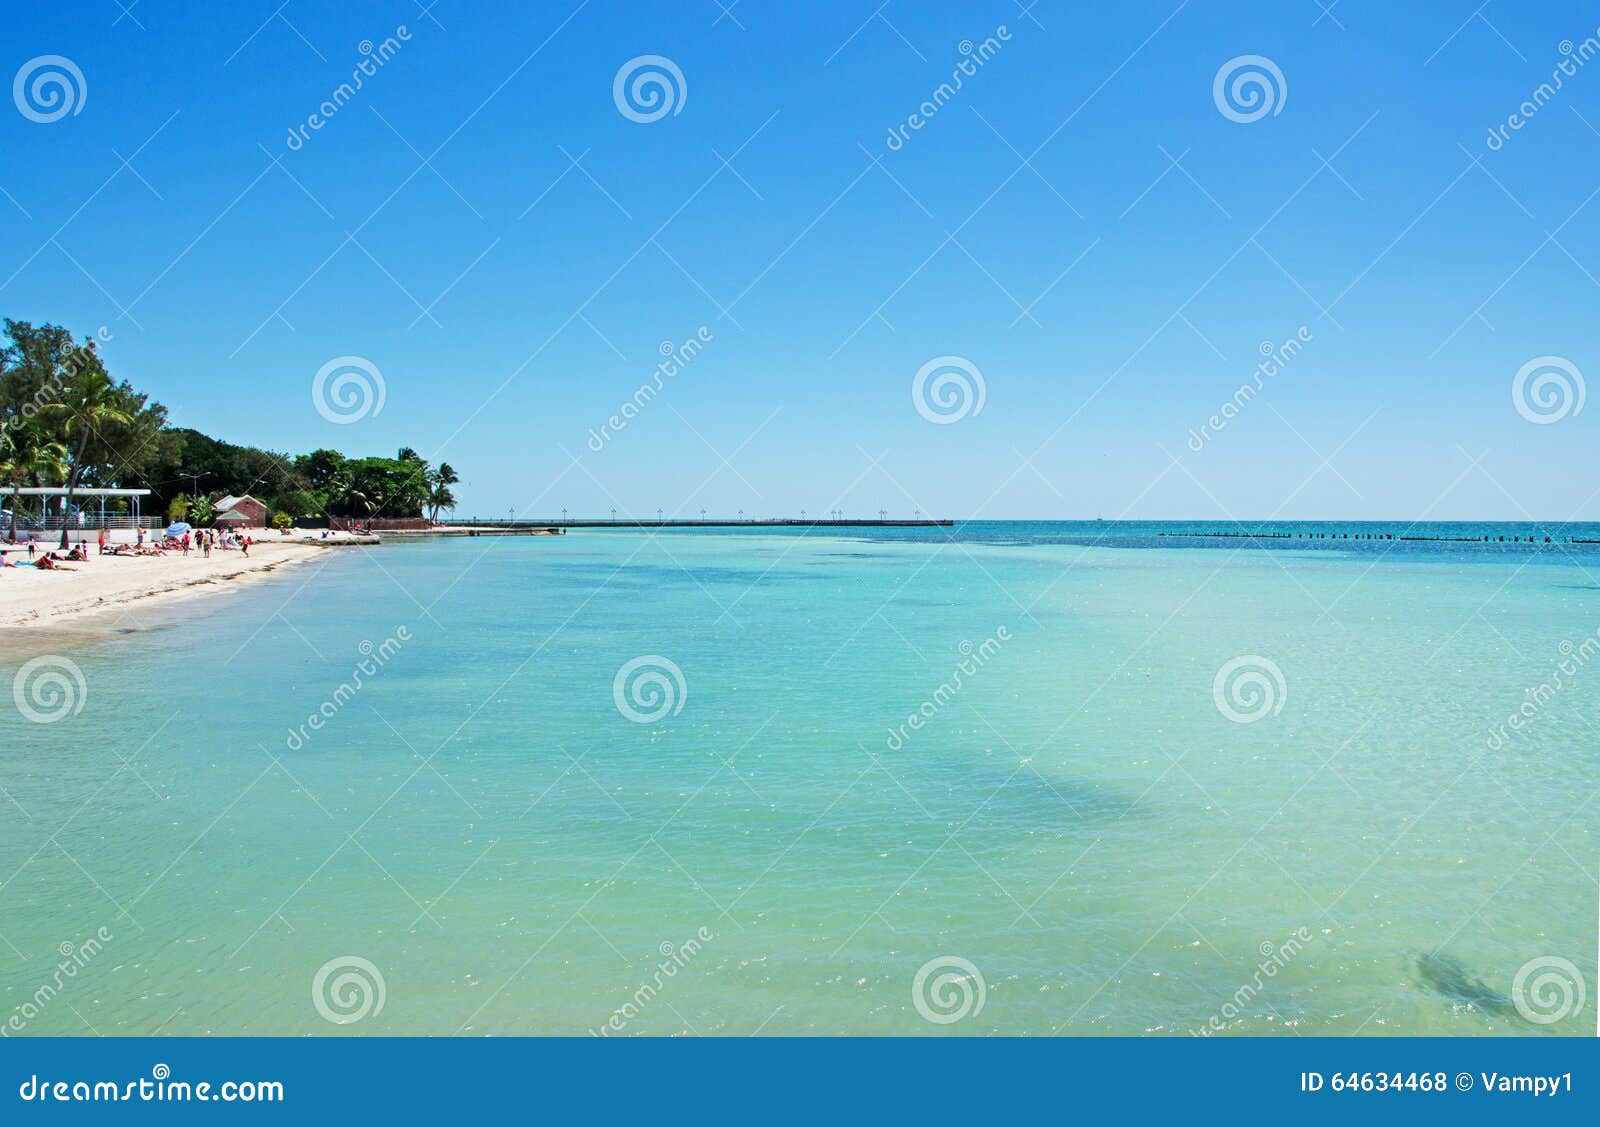 higgs beach pier, sea, key west, keys, cayo hueso, monroe county, island, florida